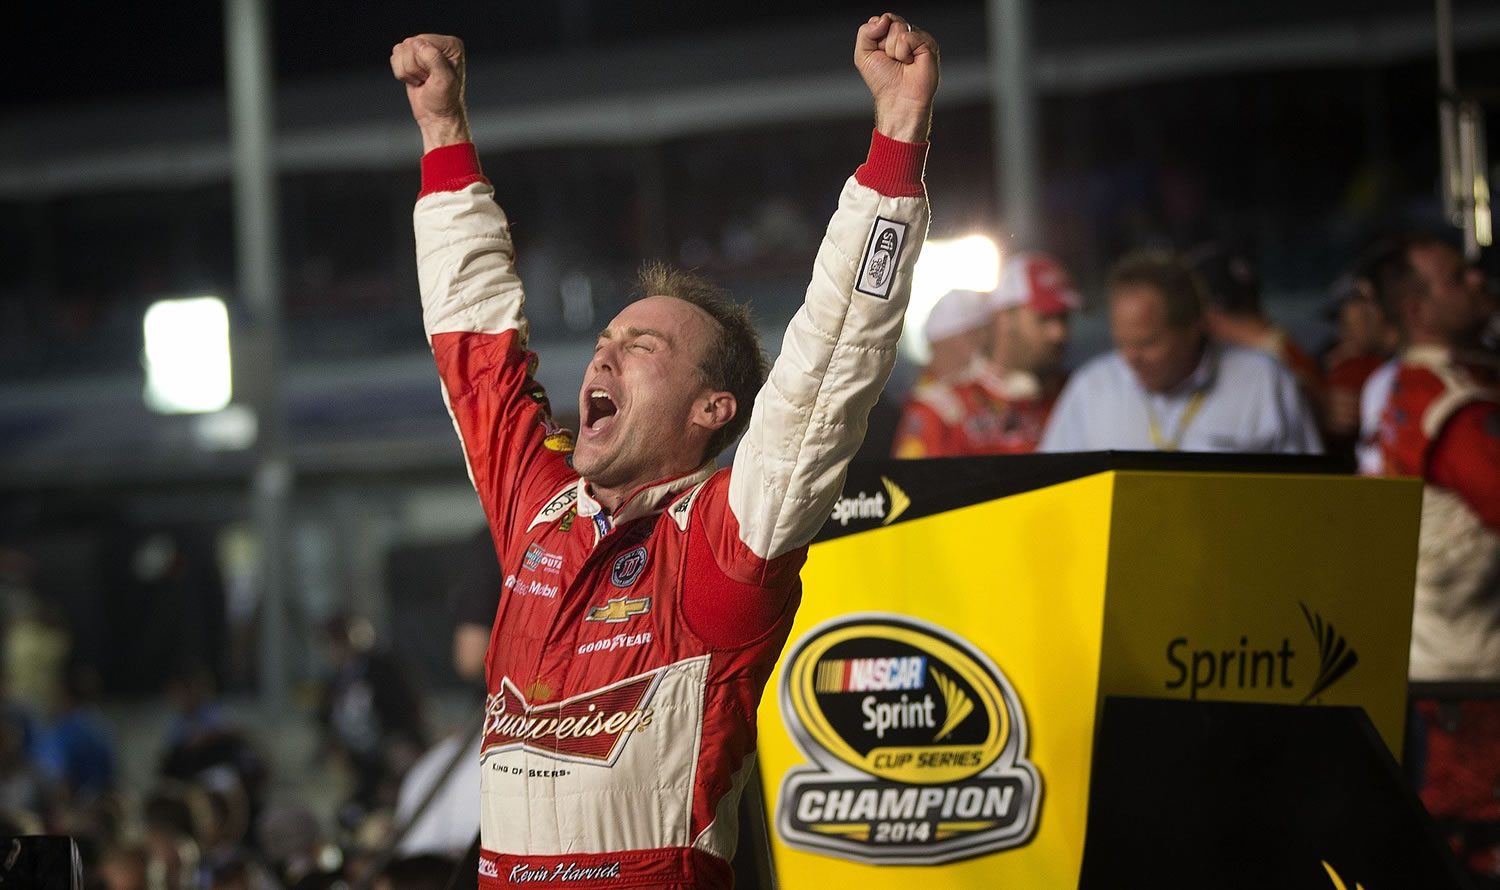 Kevin Harvick celebrates winning the NASCAR Sprint Cup championship on Sunday, Nov. 16,2014 in Homestead, Fla.